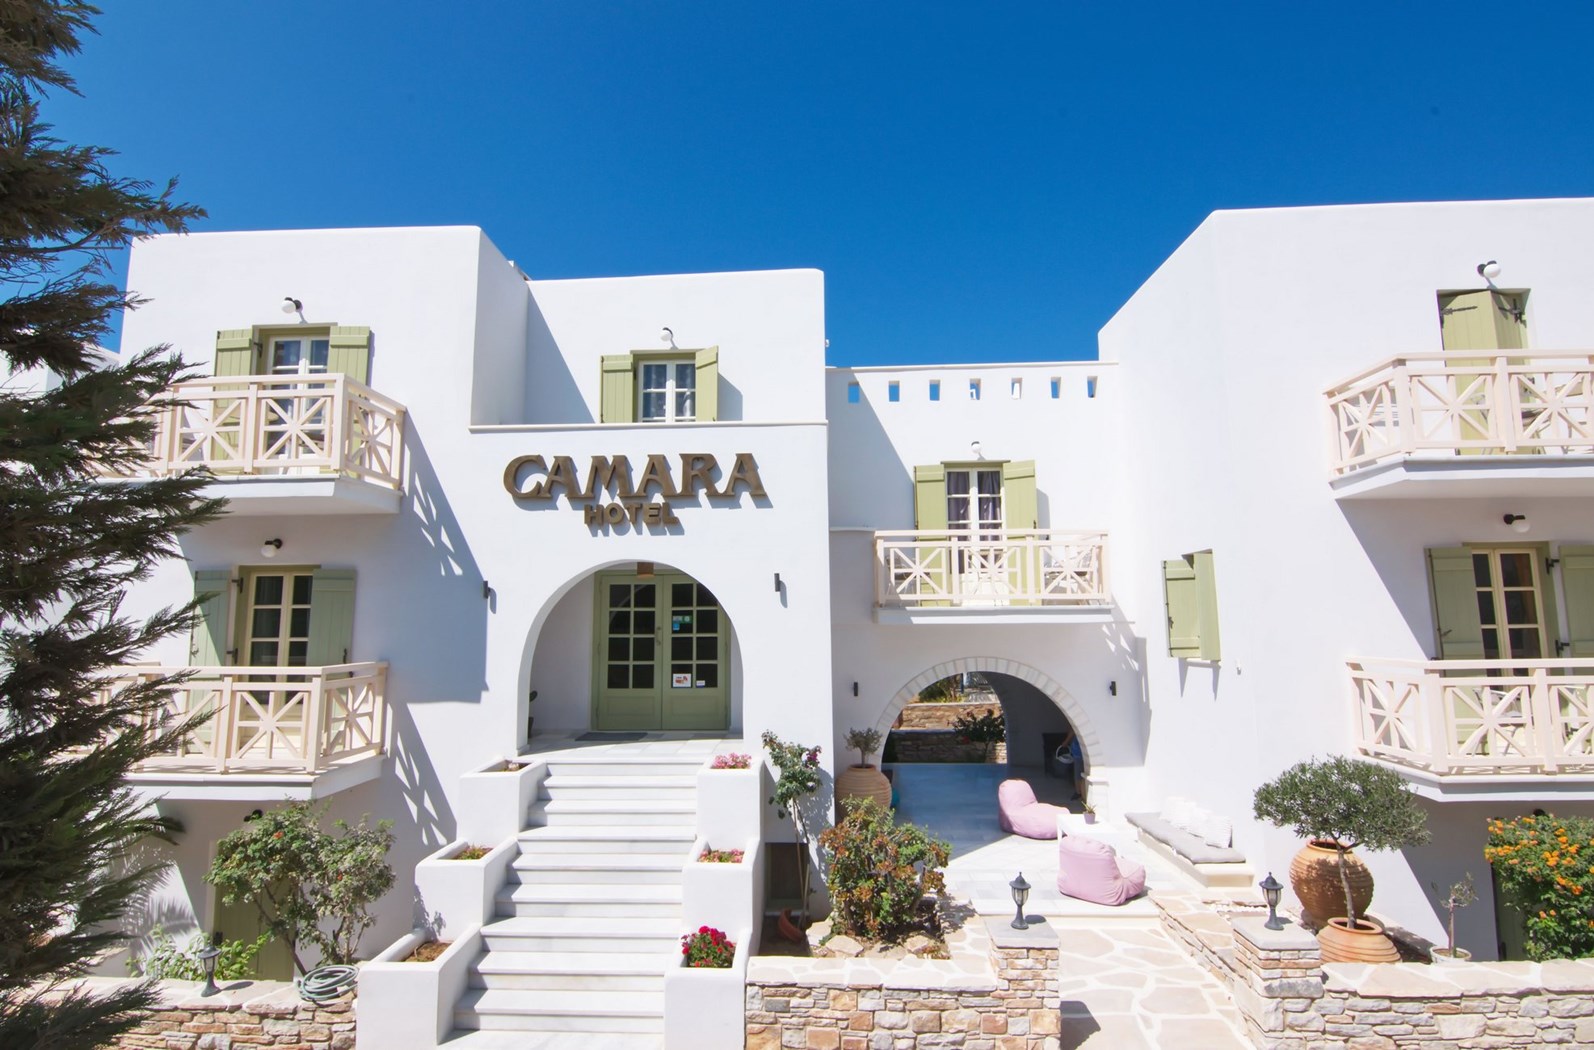 Camara Hotel - Άγιος Προκόπιος, Νάξος ✦ 2 Ημέρες (1